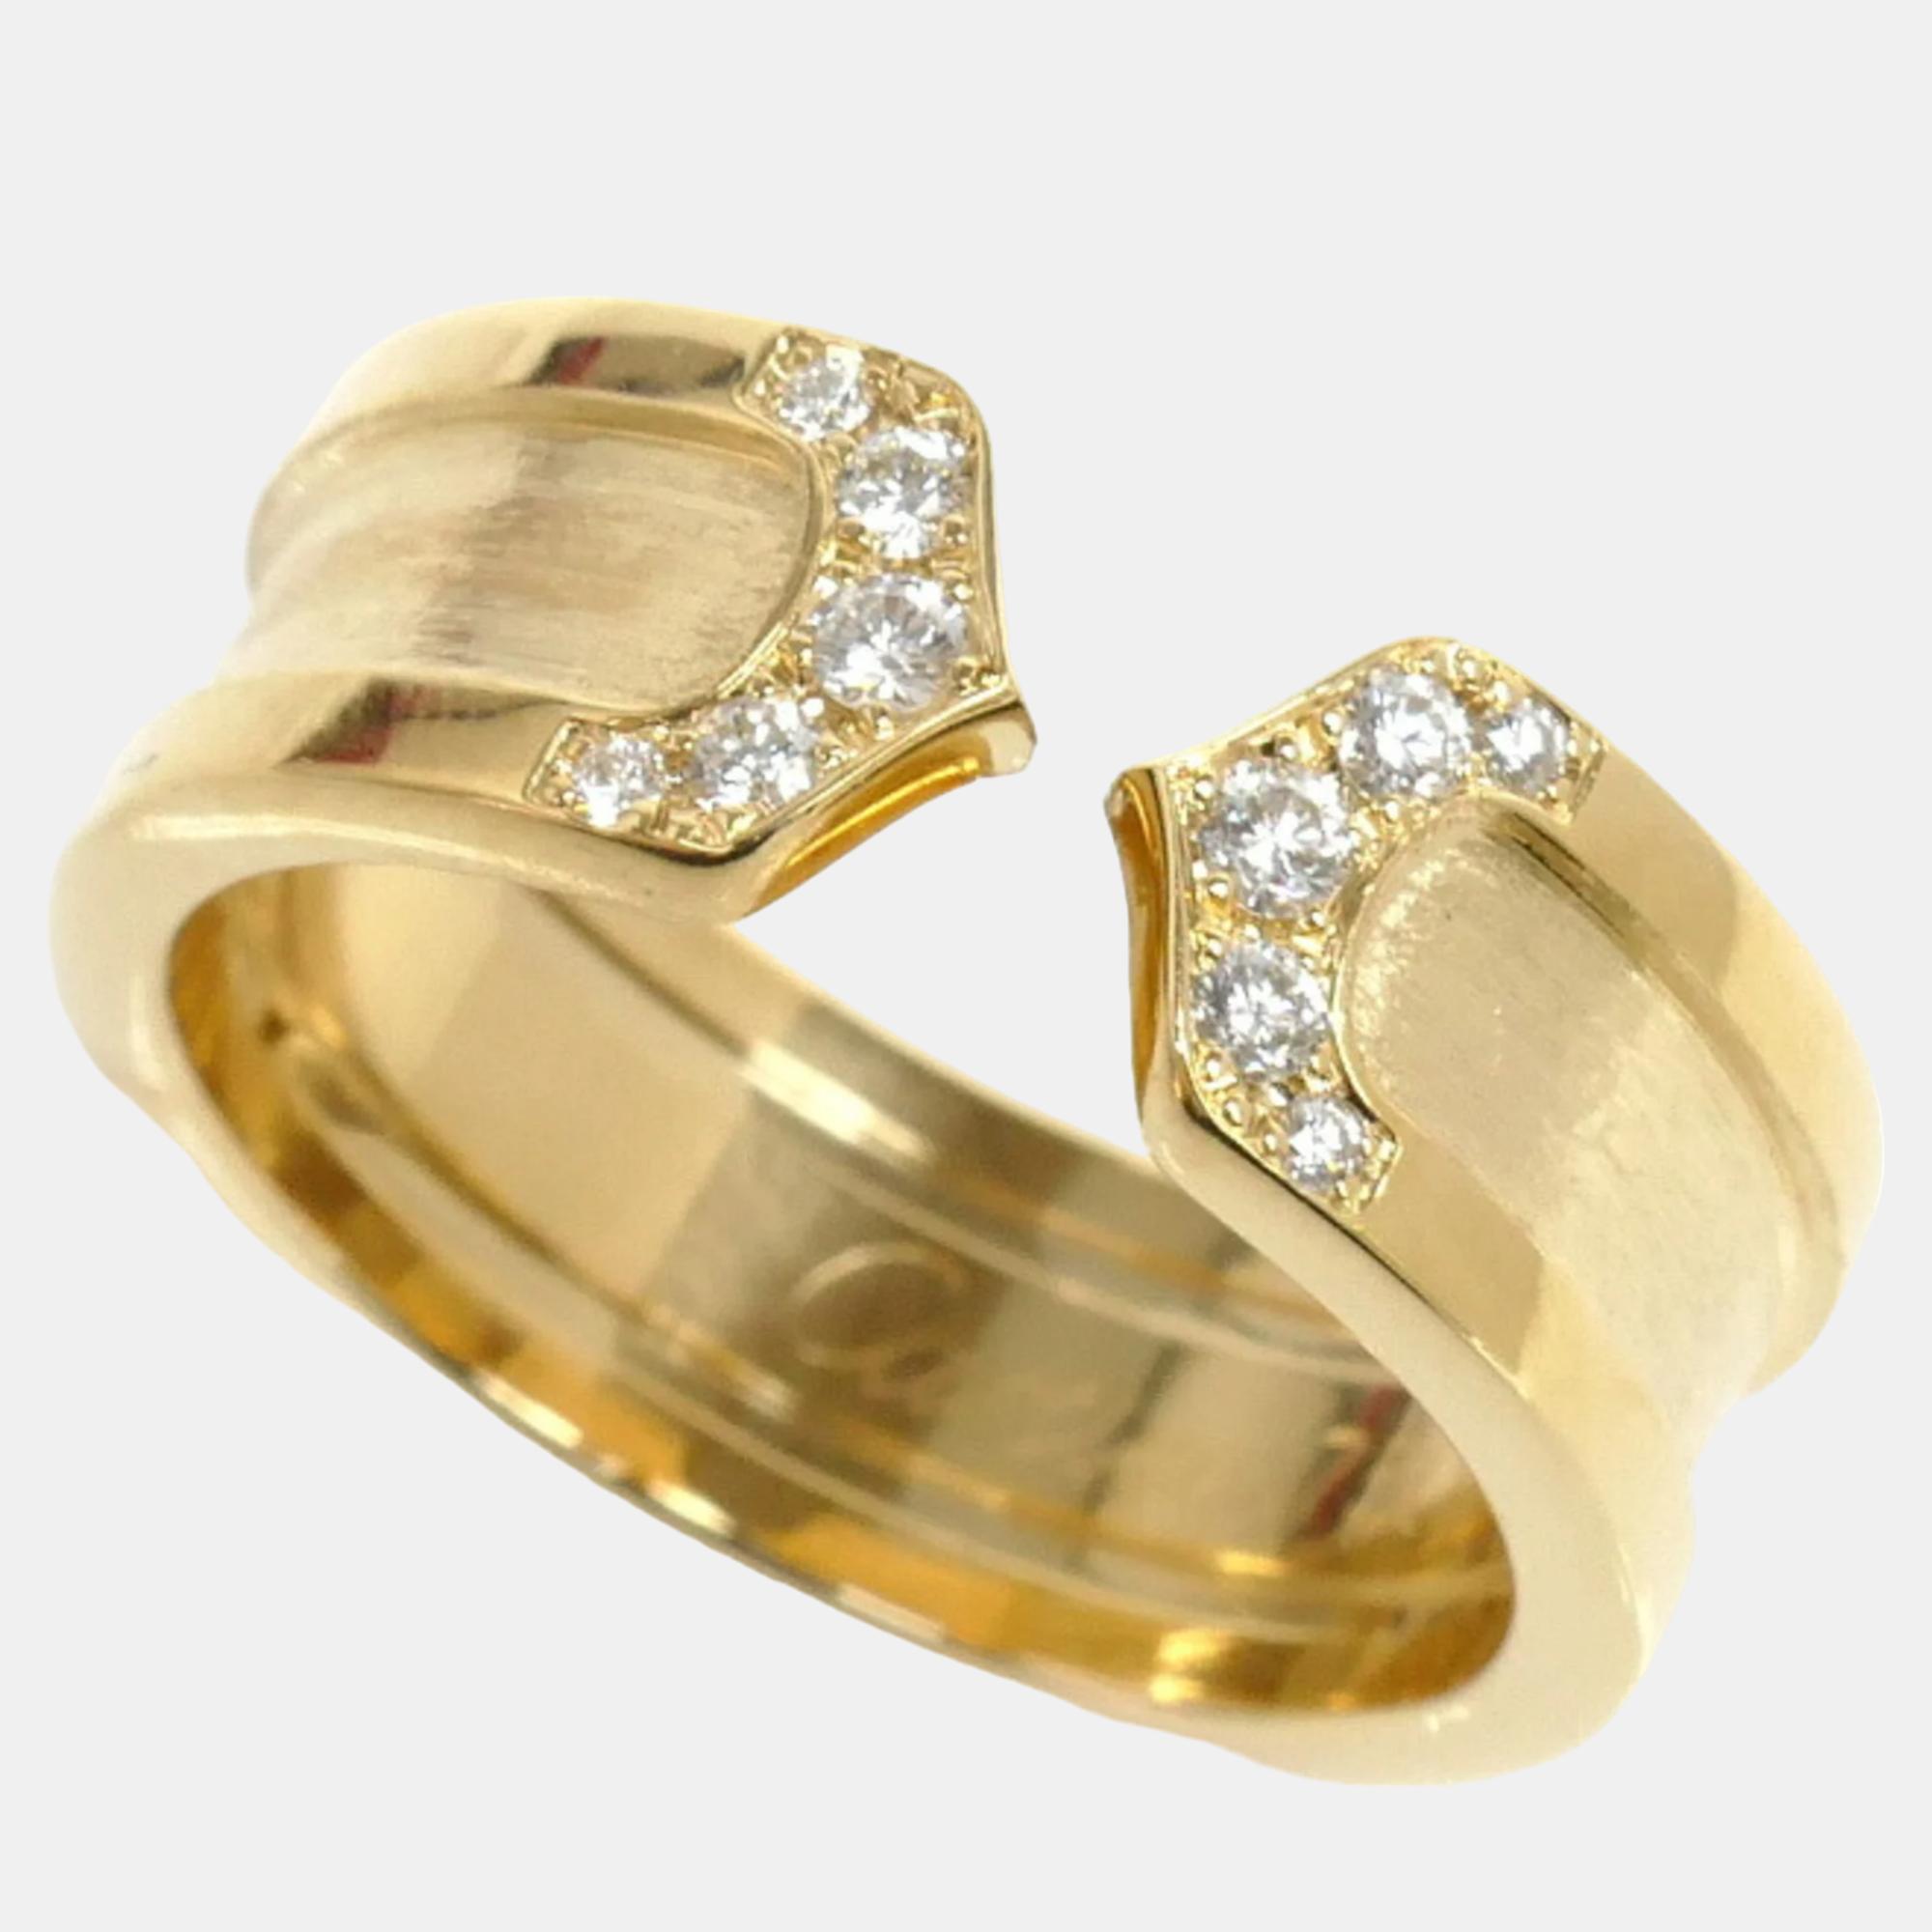 Cartier 18k yellow gold and diamond c de cartier band ring eu 48